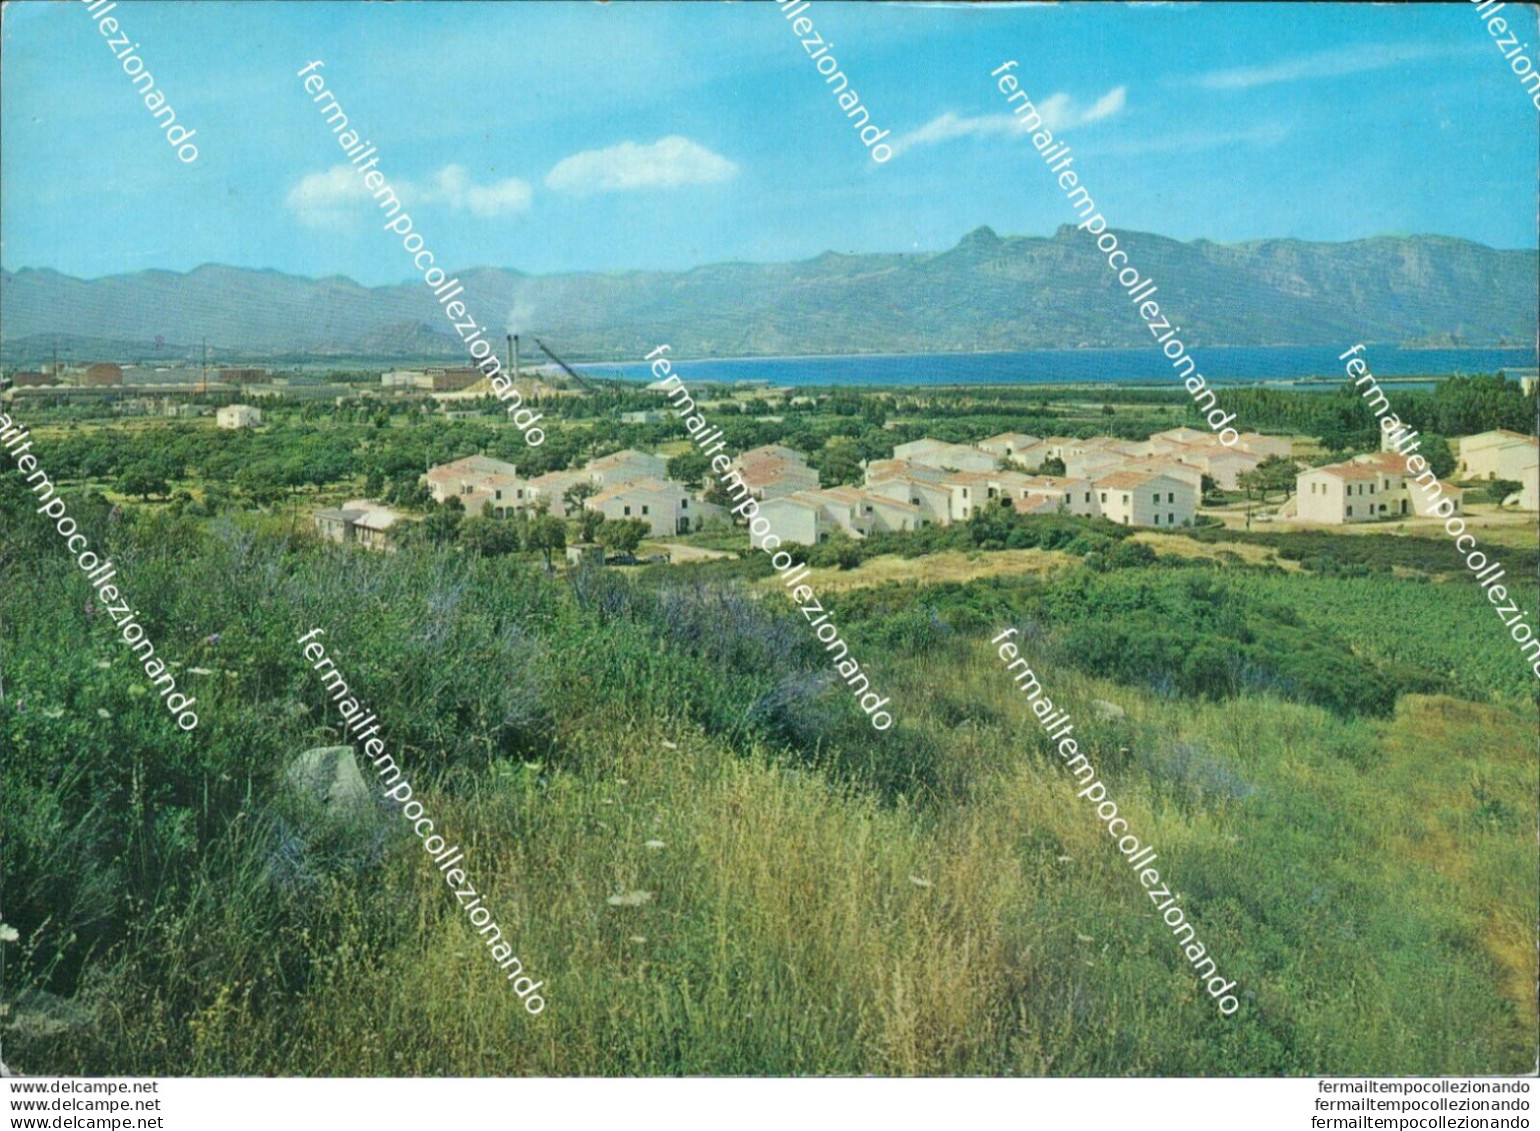 Bi528 Cartolina Arbatax Marina Di Tortoli Provincia Di Nuoro - Nuoro